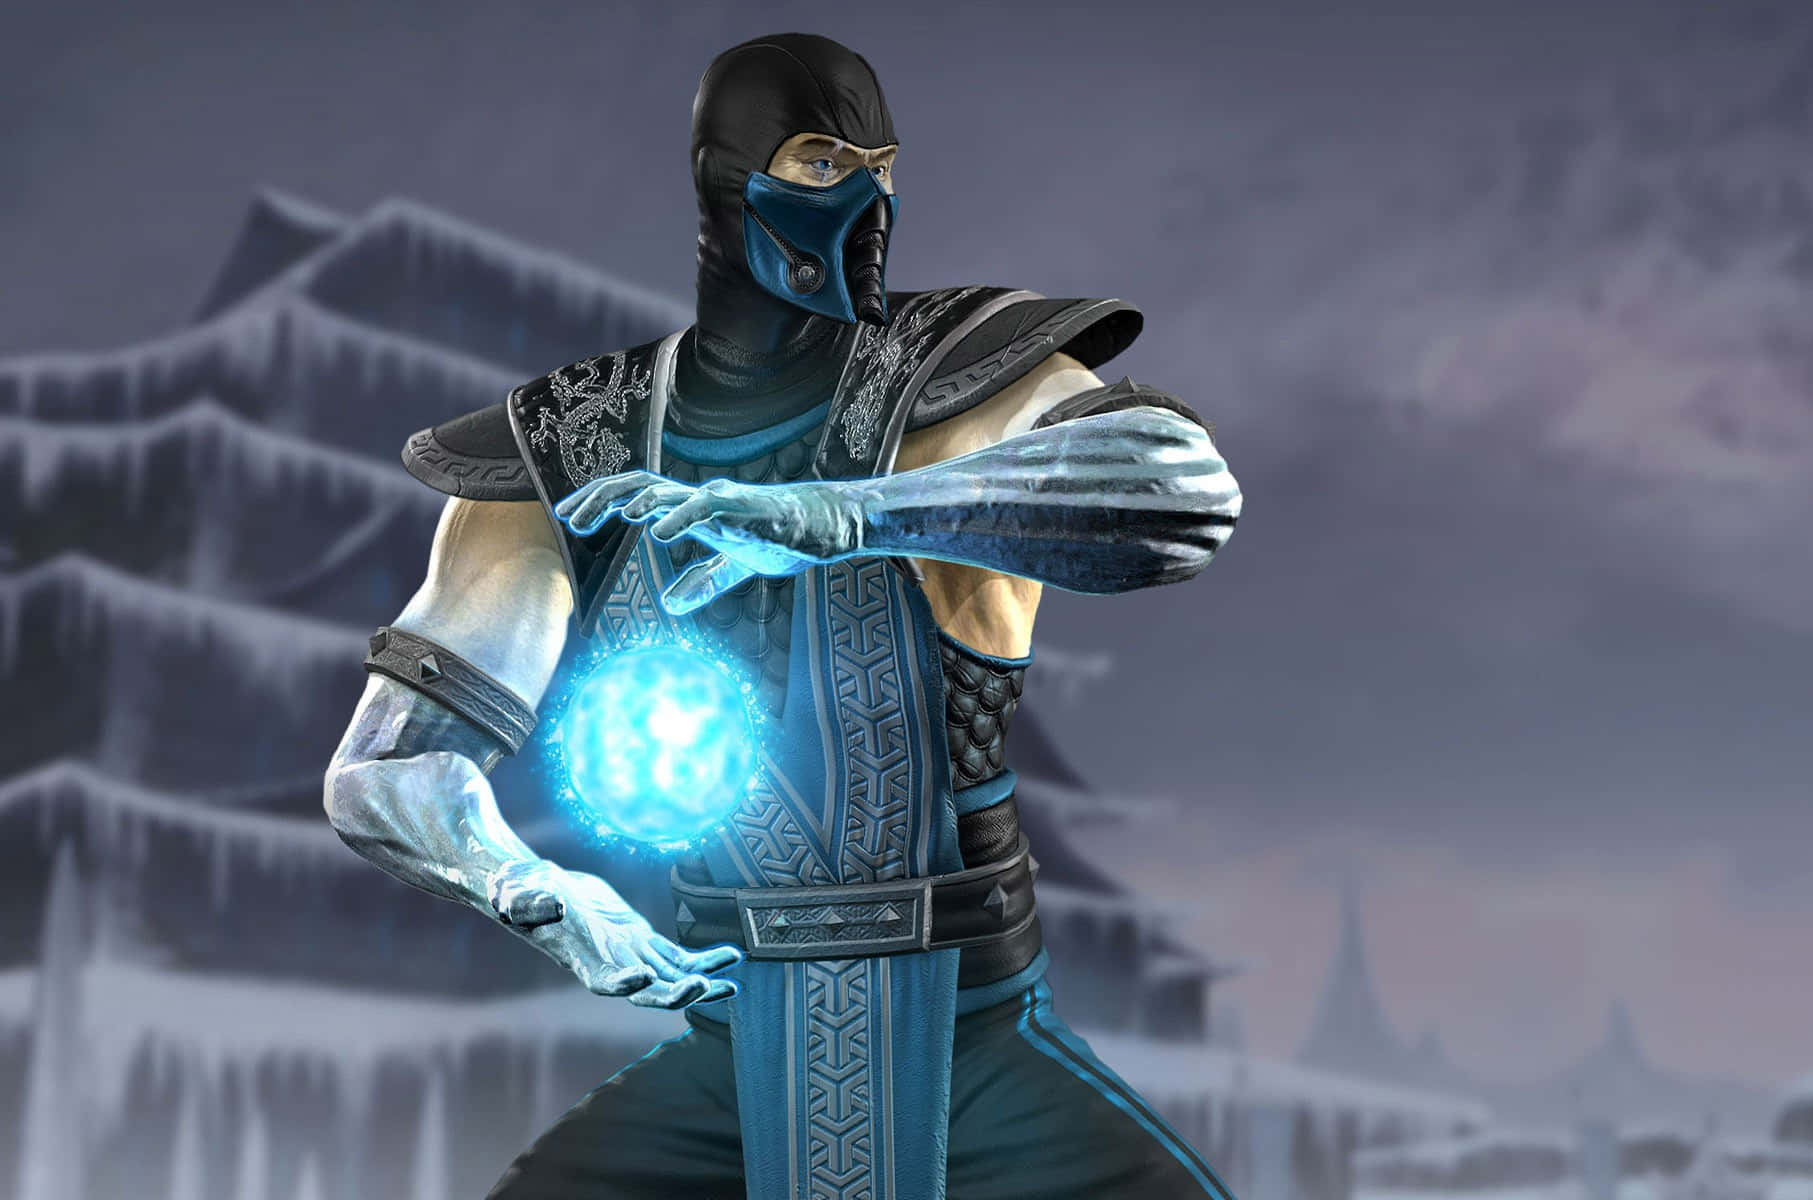 Sub-Zero unleashes icy fury in Mortal Kombat Wallpaper